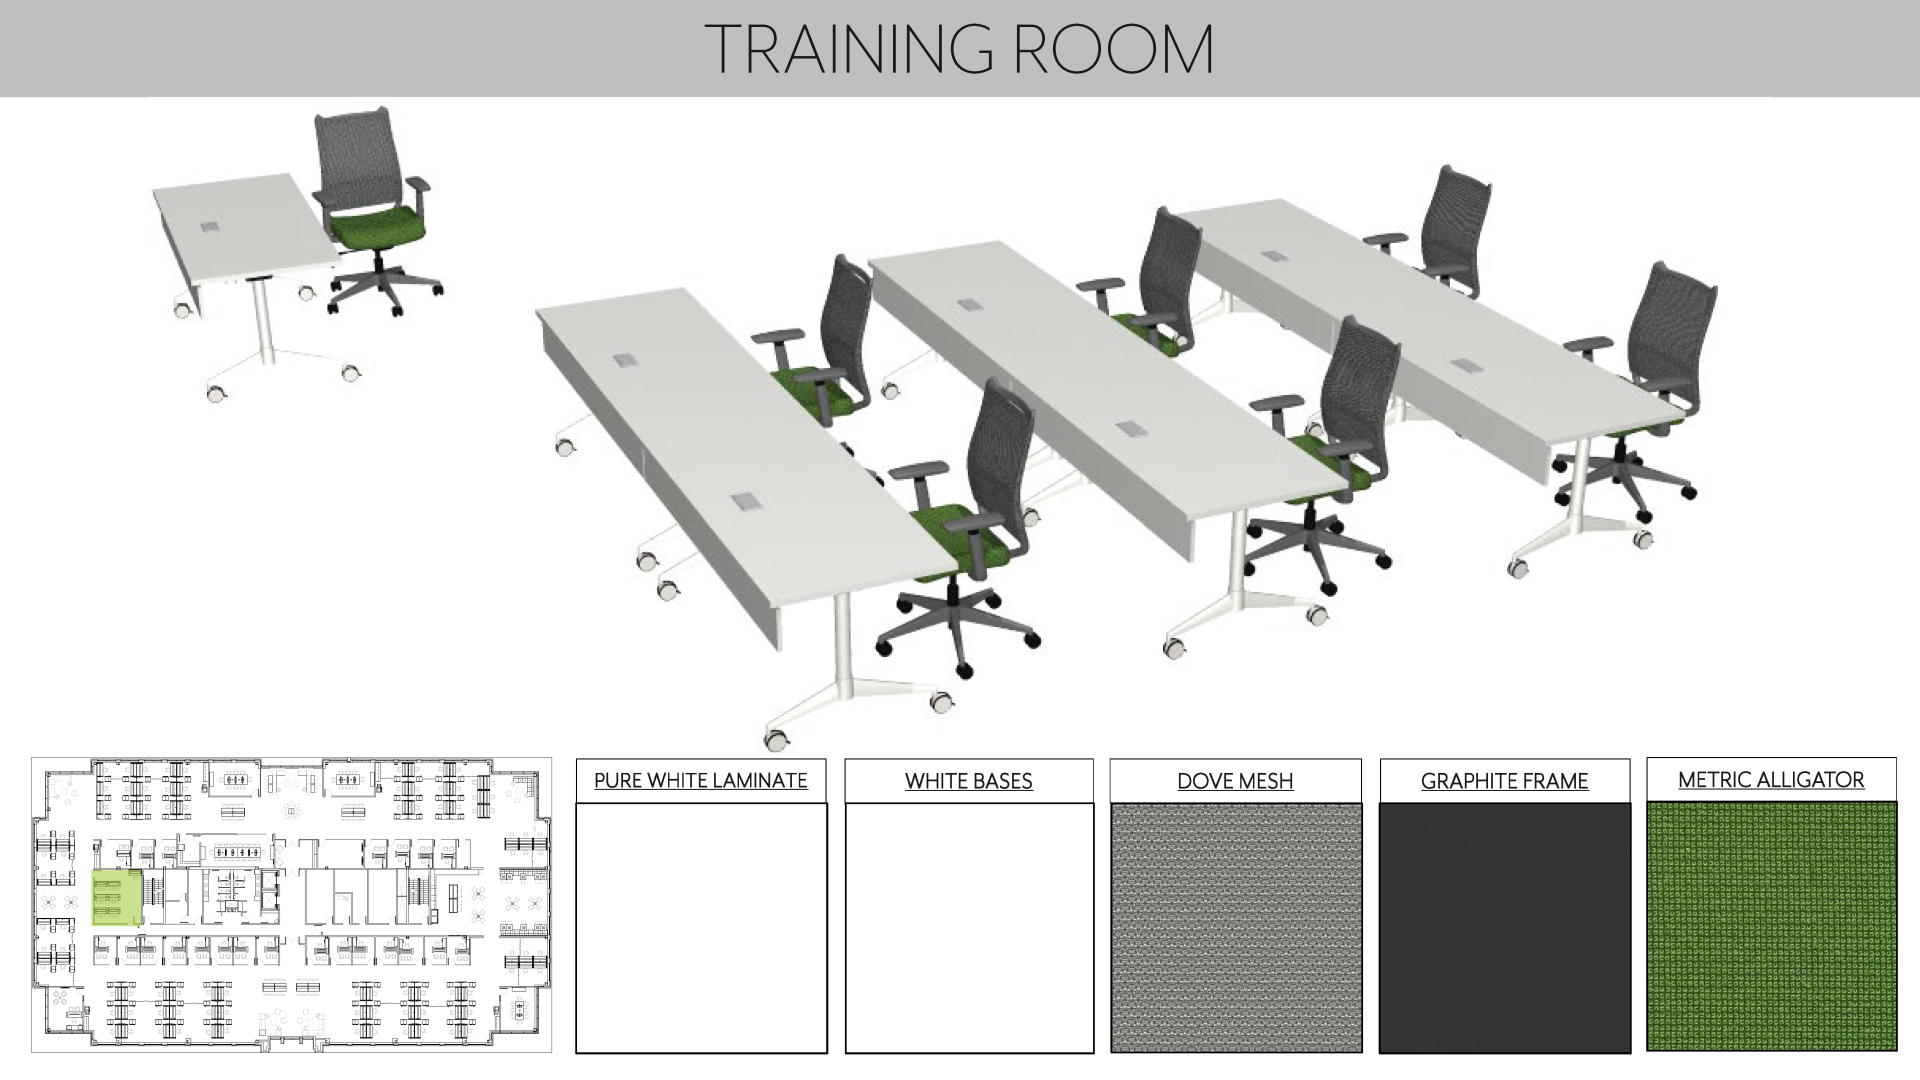 Training room layout